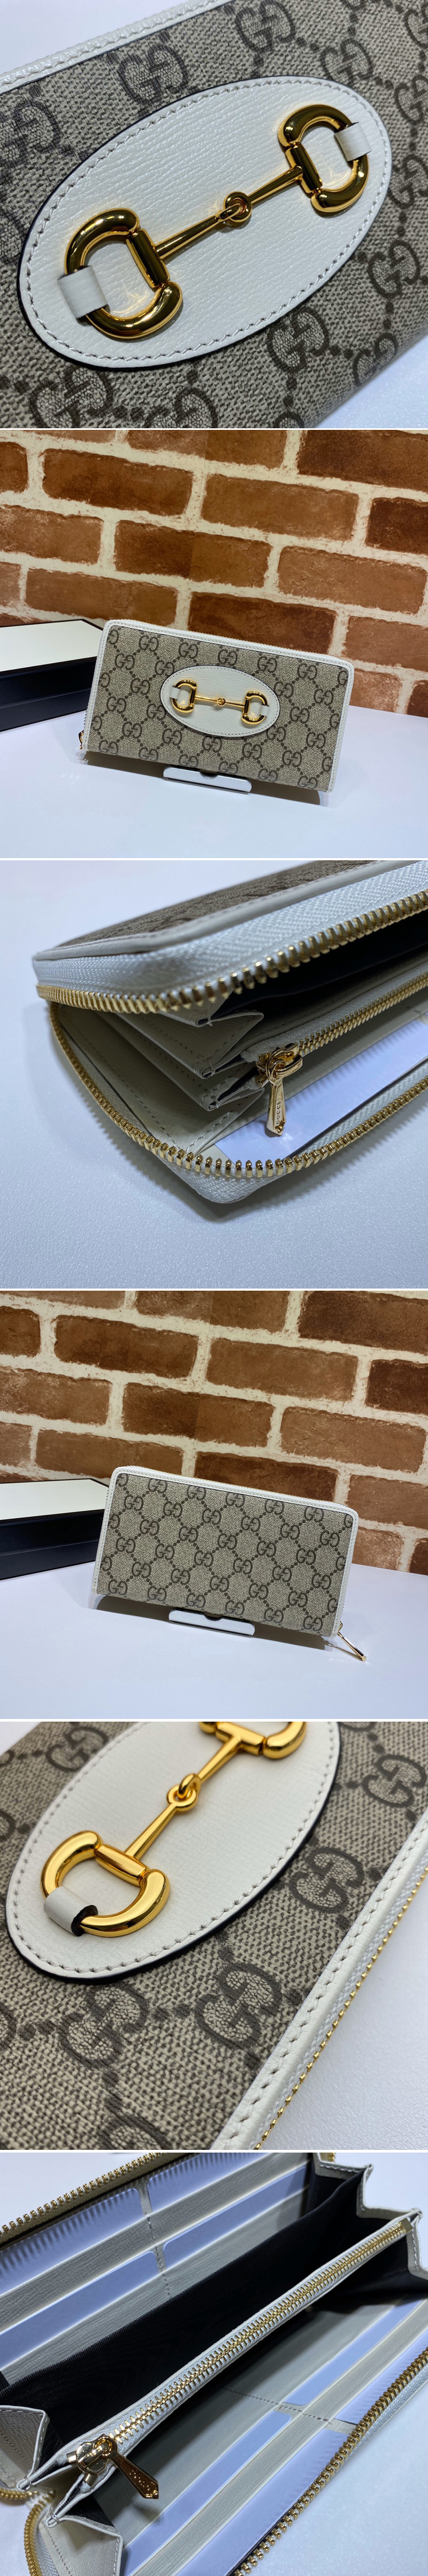 Replica Gucci 621889 Gucci 1955 Horsebit zip around wallet in Beige/ebony GG Supreme canvas With White Leather